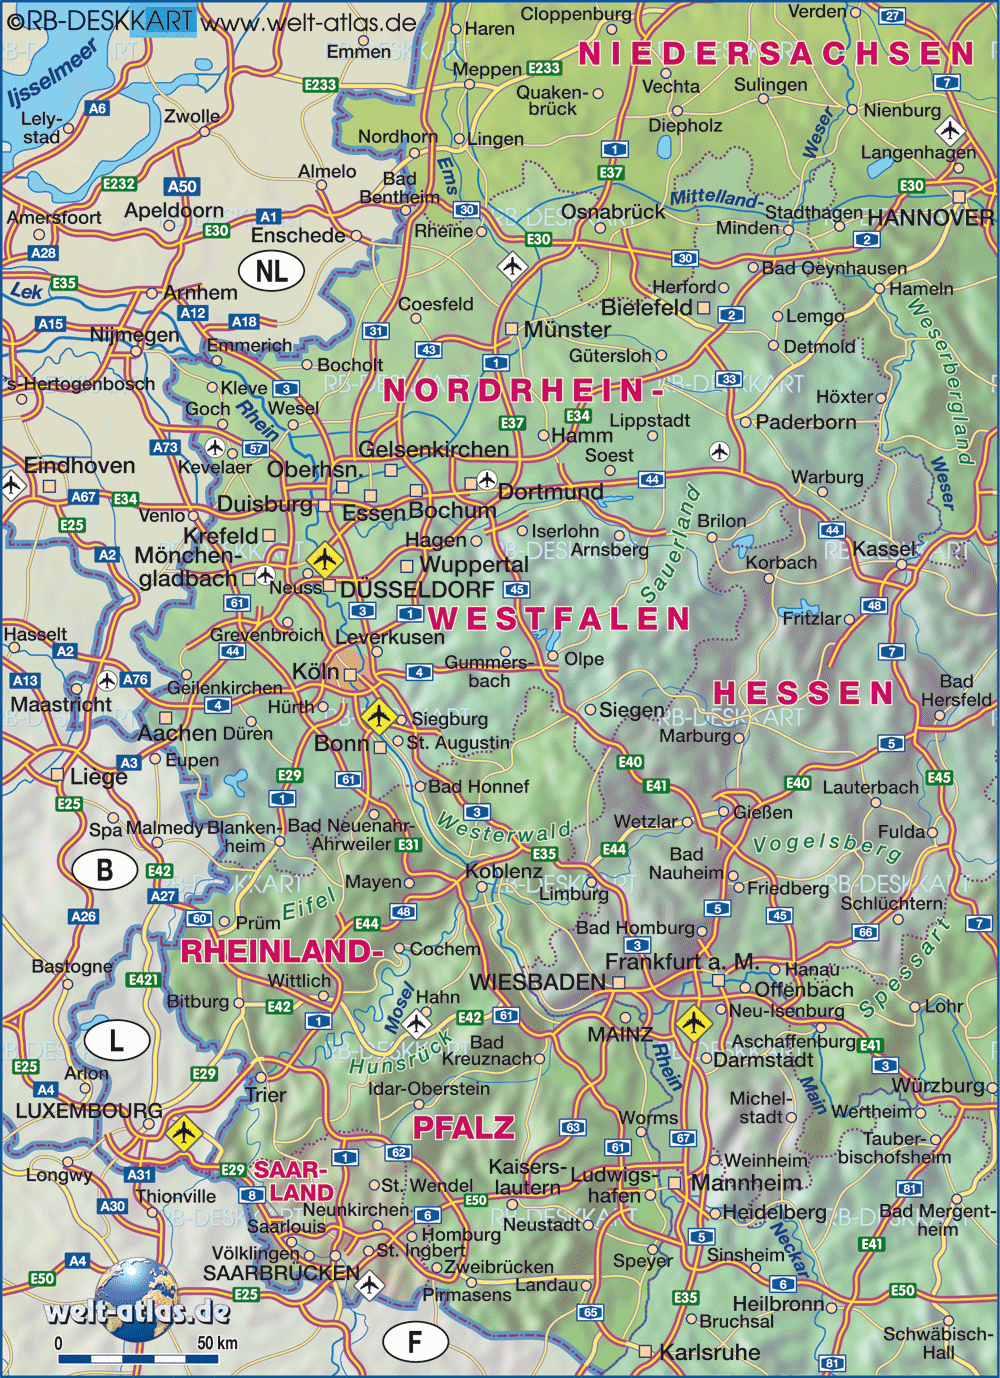 Leverkusen north westfallen map